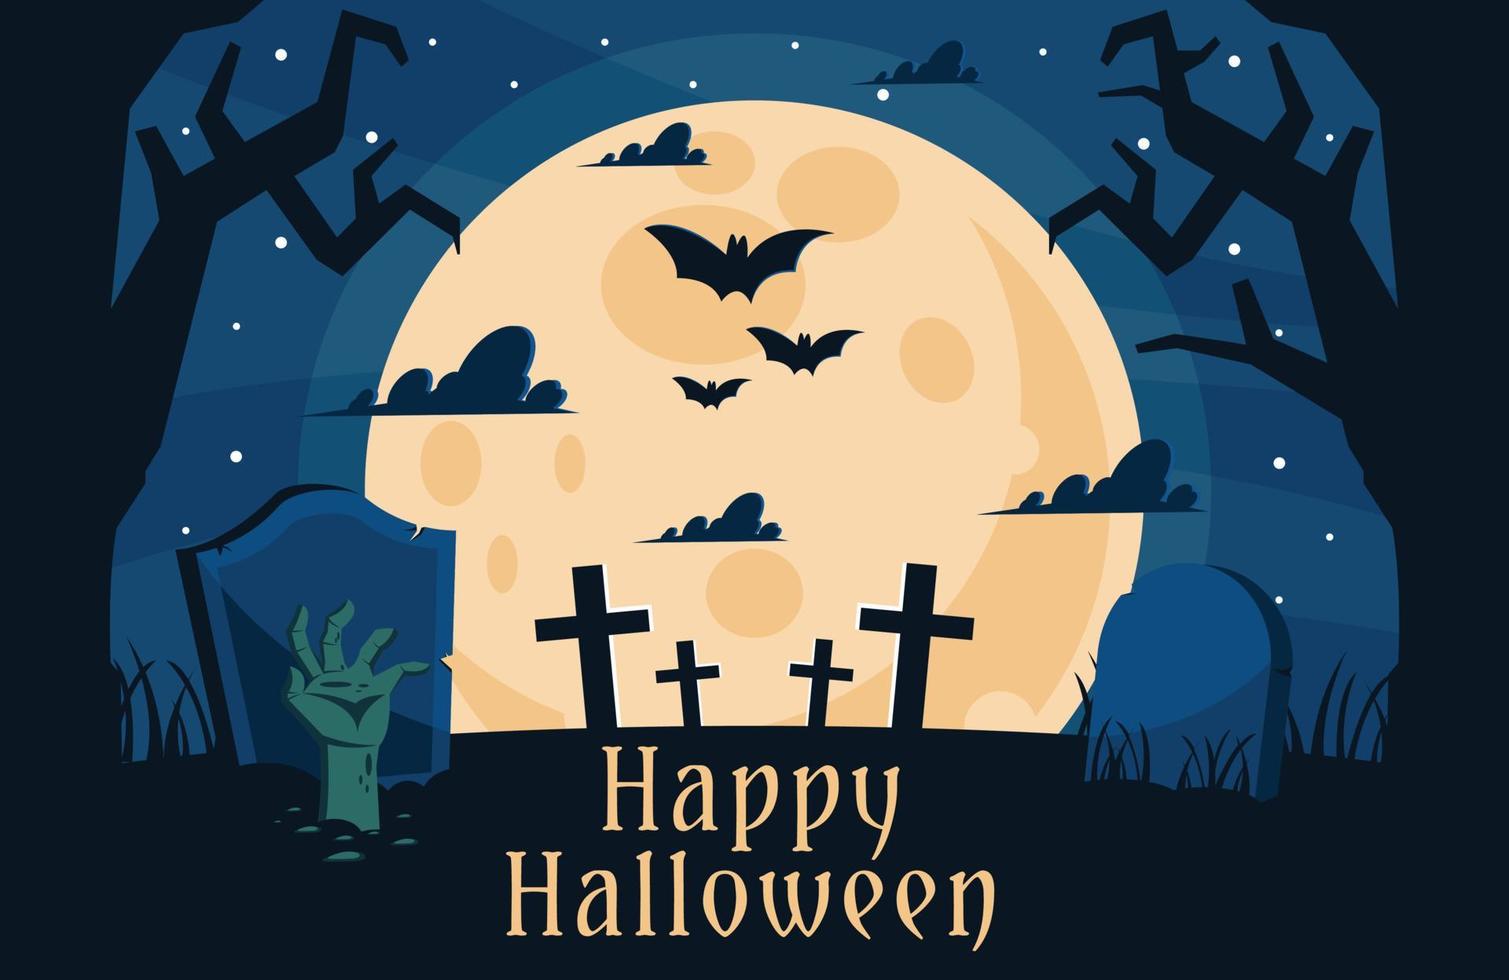 Happy Halloween graveyard background with zombie hand vector